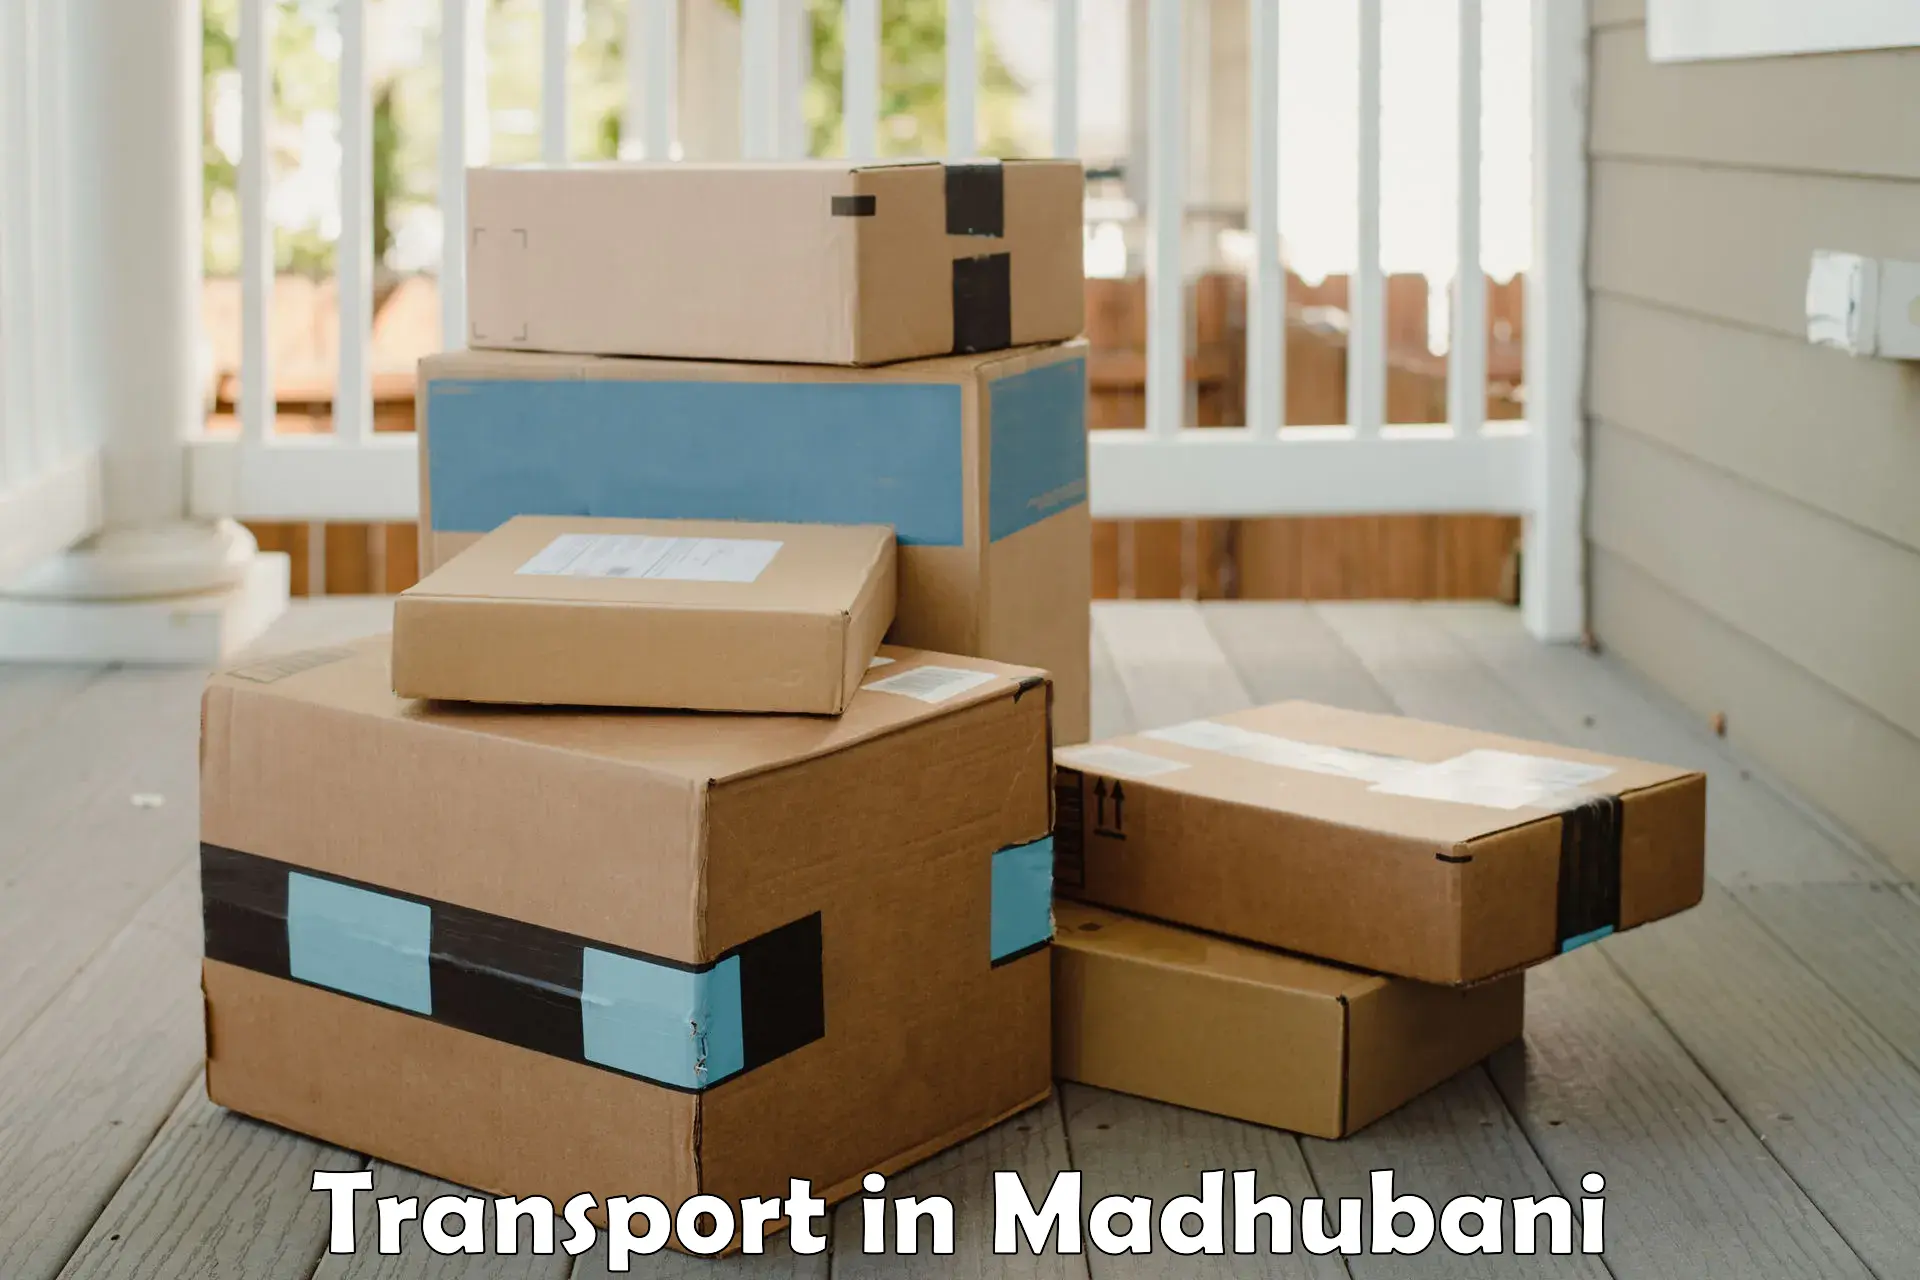 Transportation solution services in Madhubani